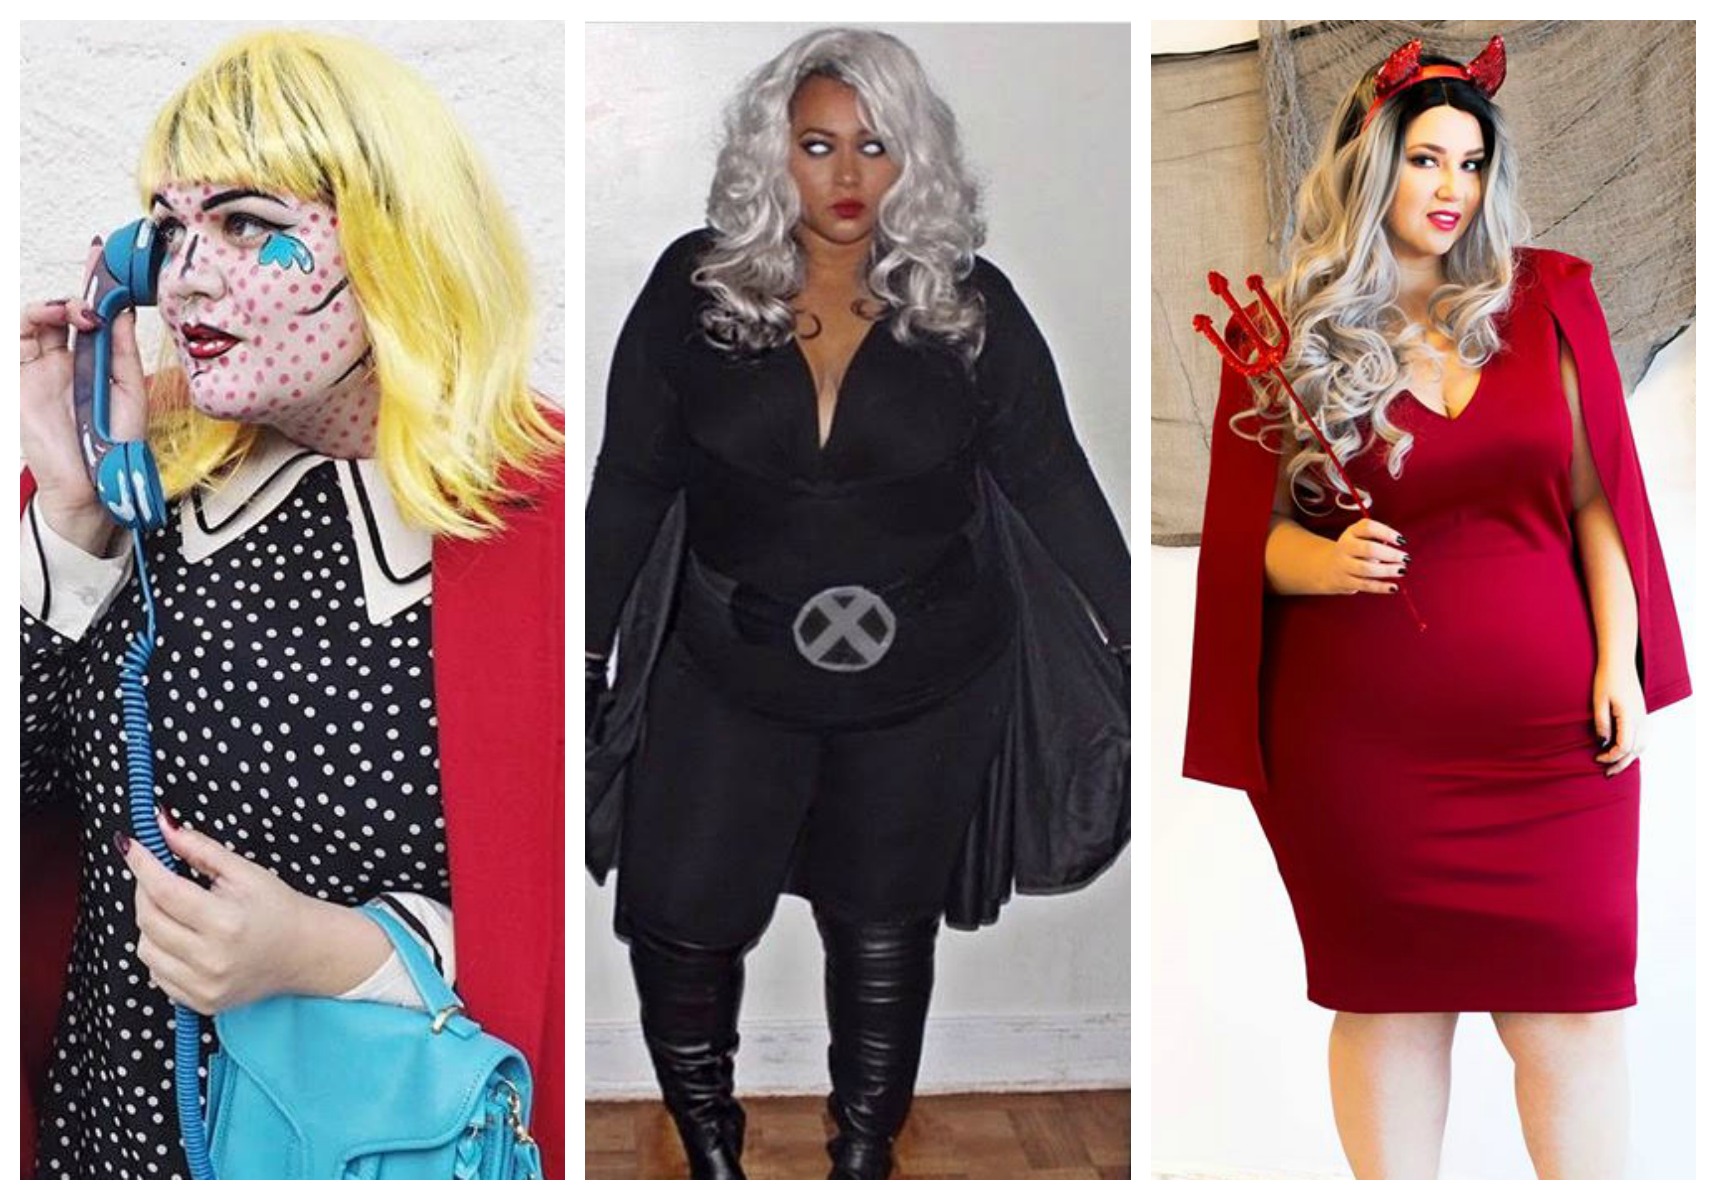 diy halloween costumes for plus size women